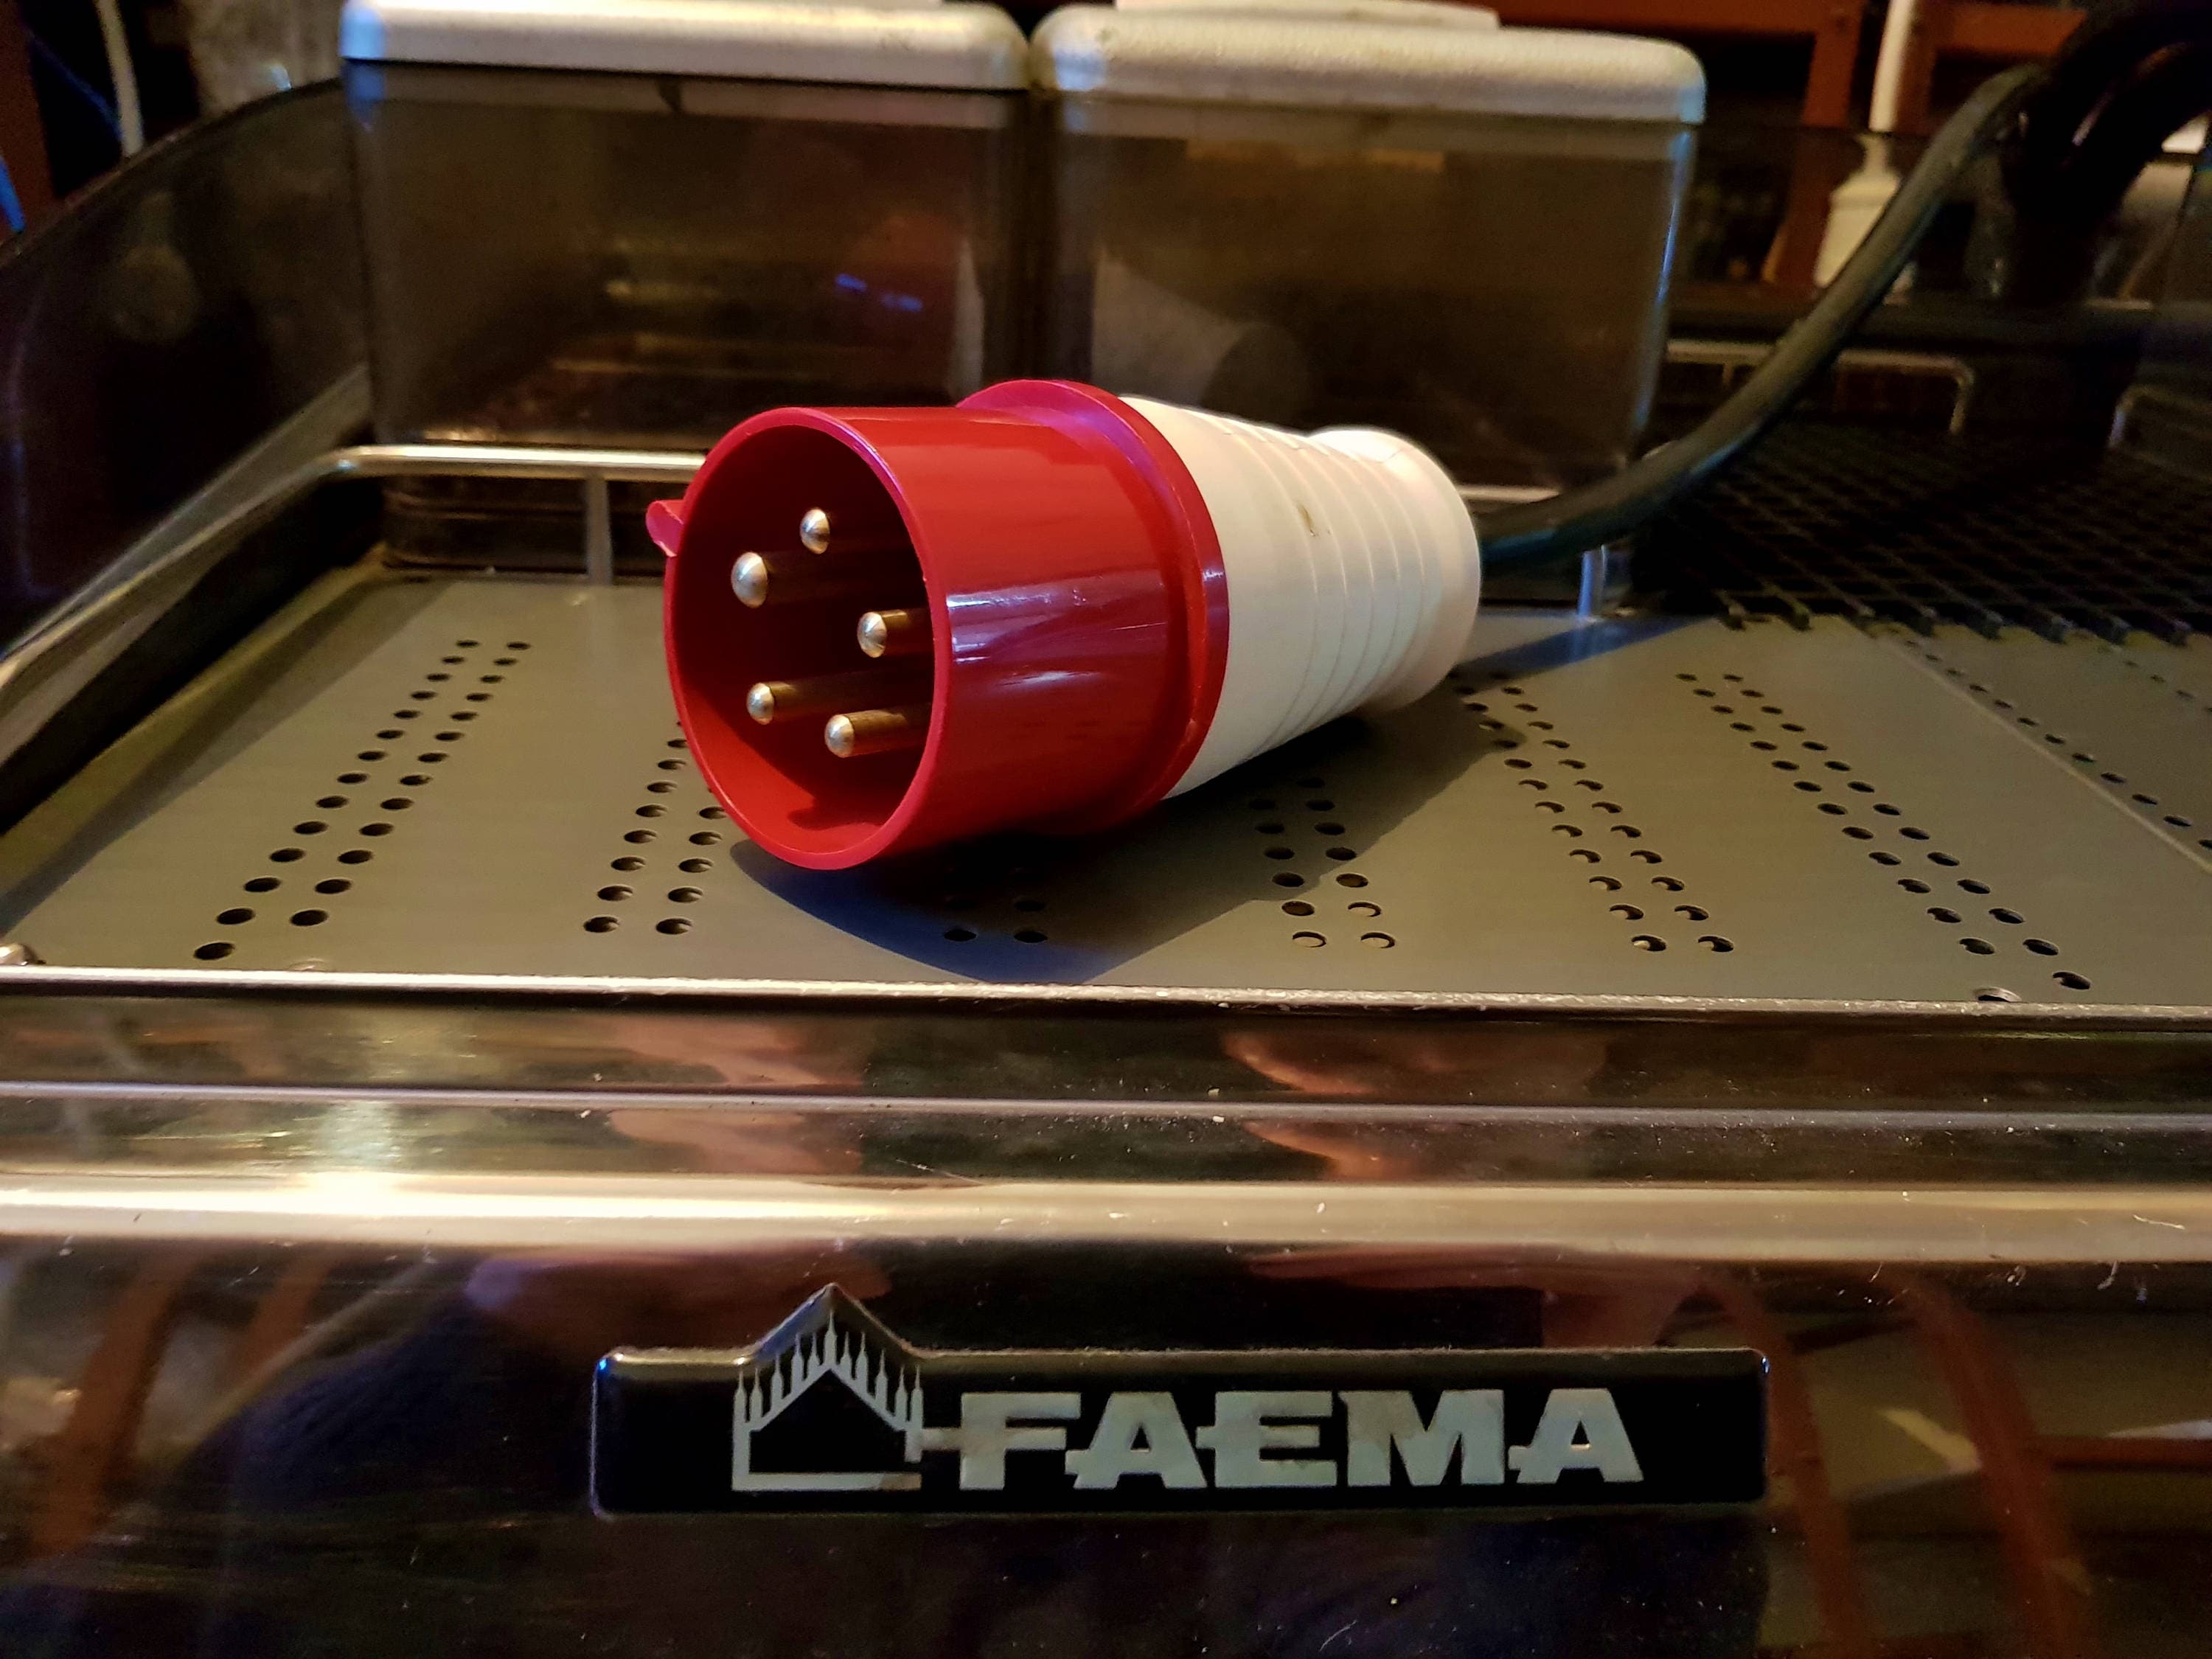 FAEMA X3 PRESTIGE II Espresso Maker